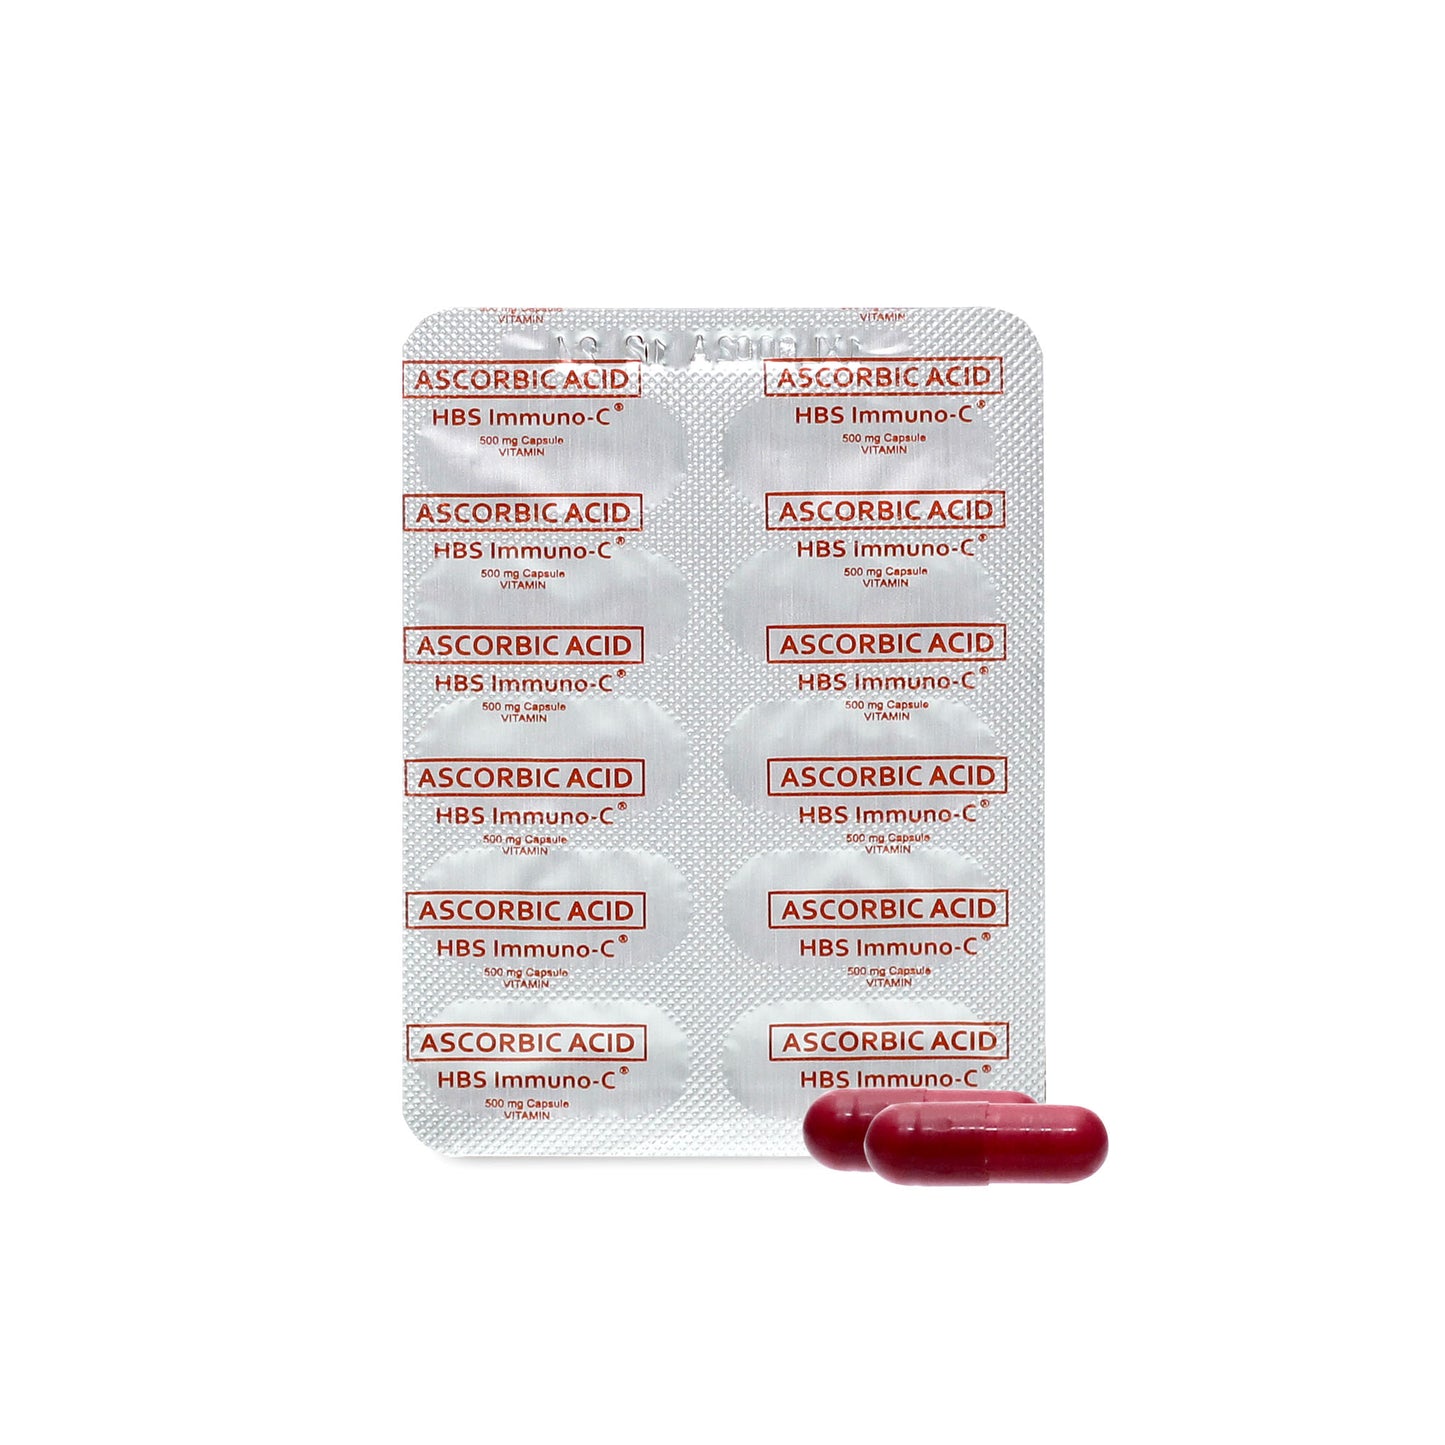 HBS Immuno-C 500mg per capsule (60 capsules)